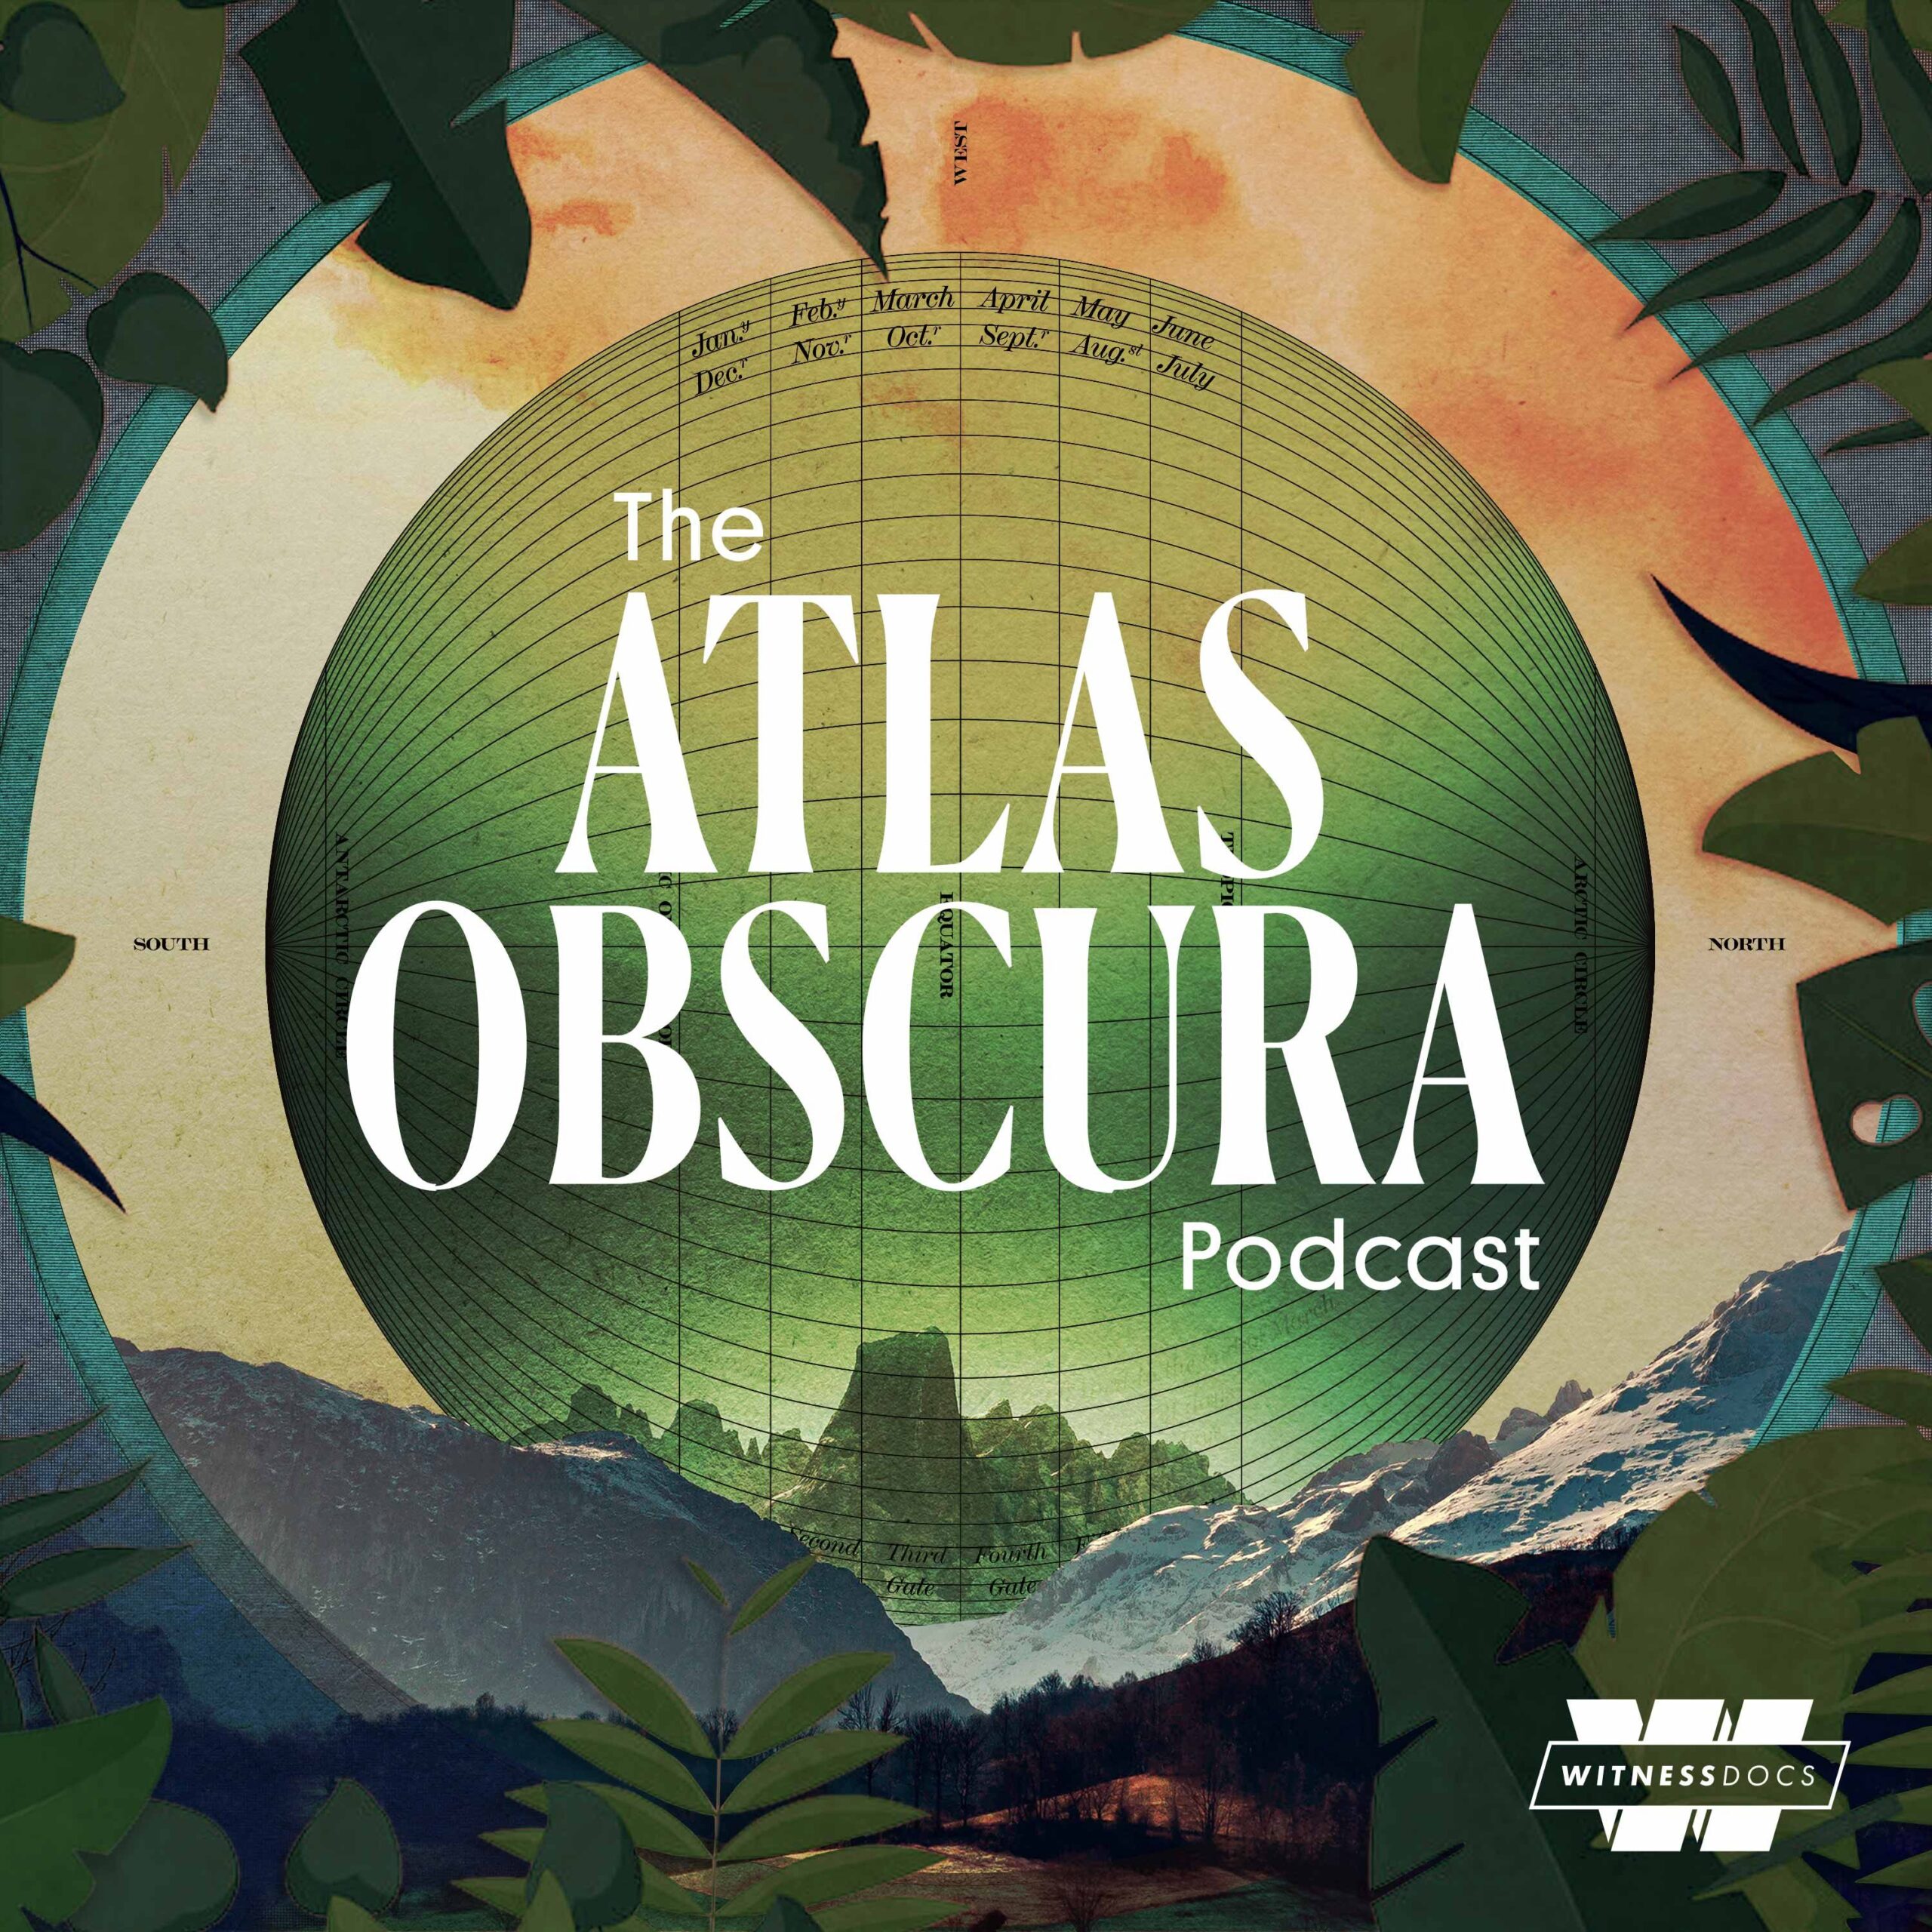 "The Atlas Obscura Podcast" art